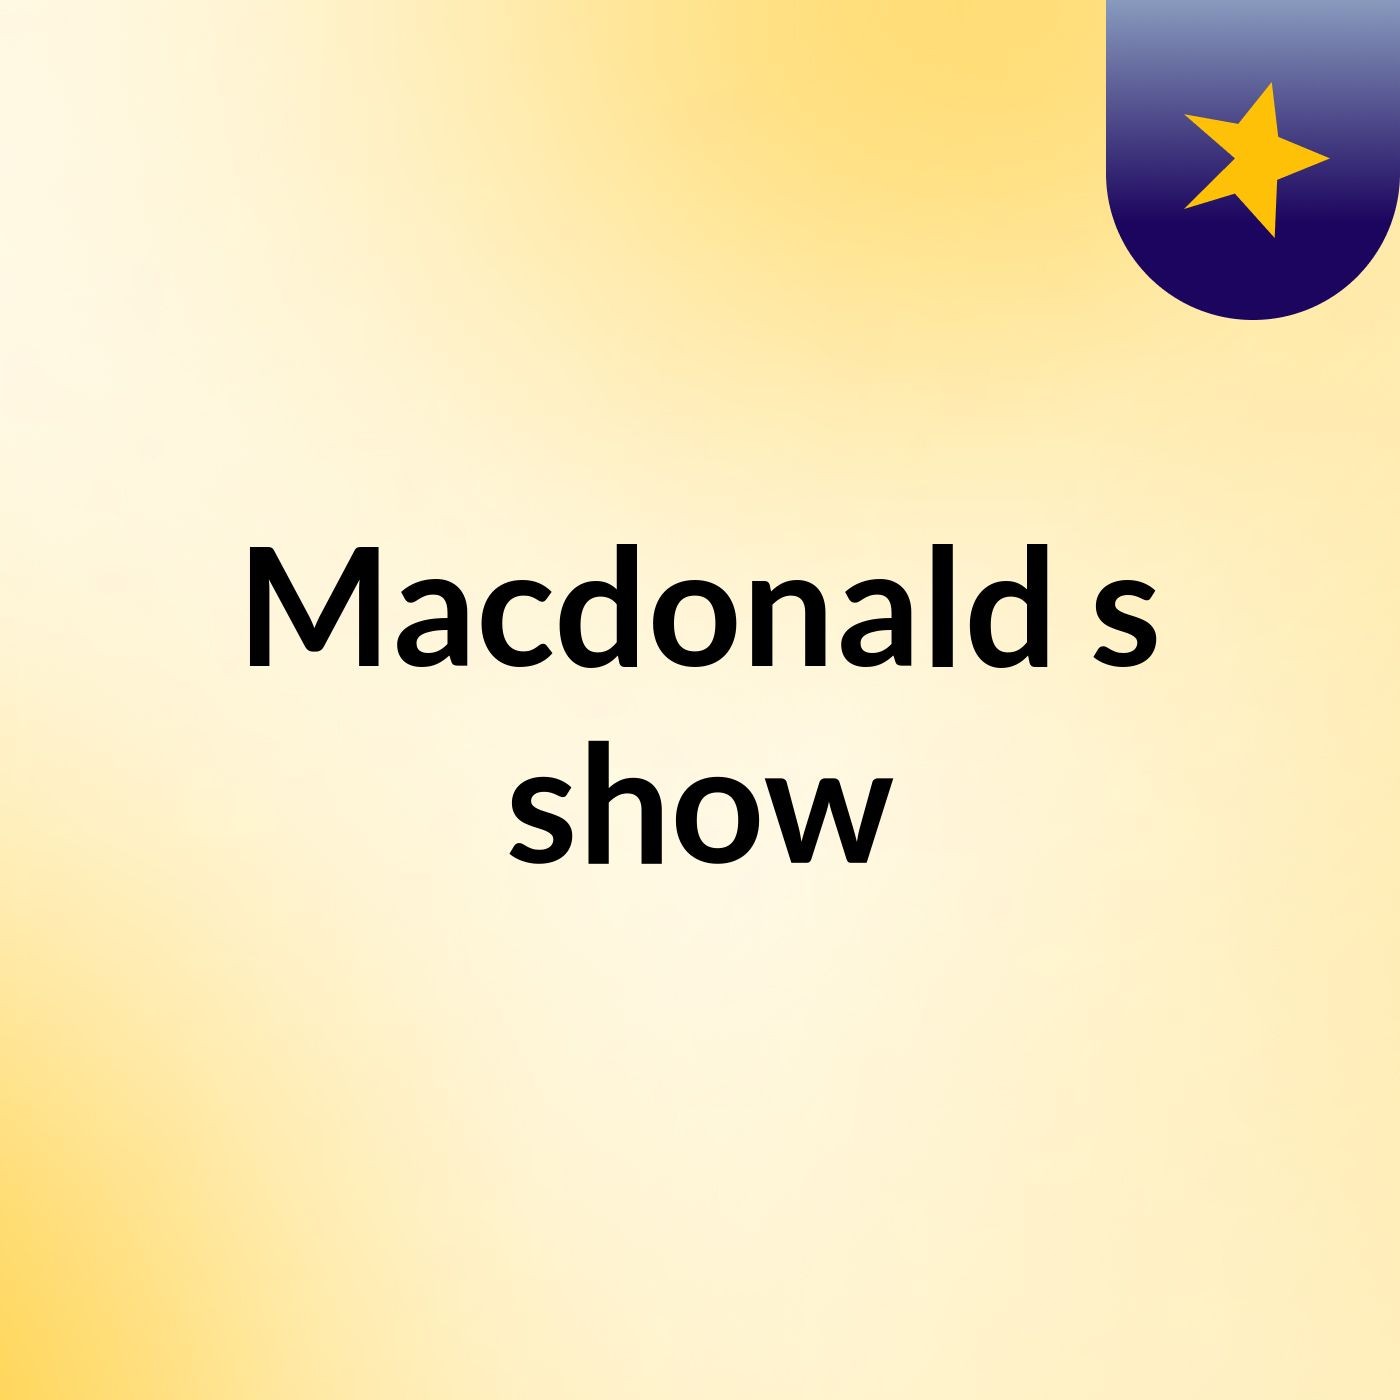 Macdonald's show